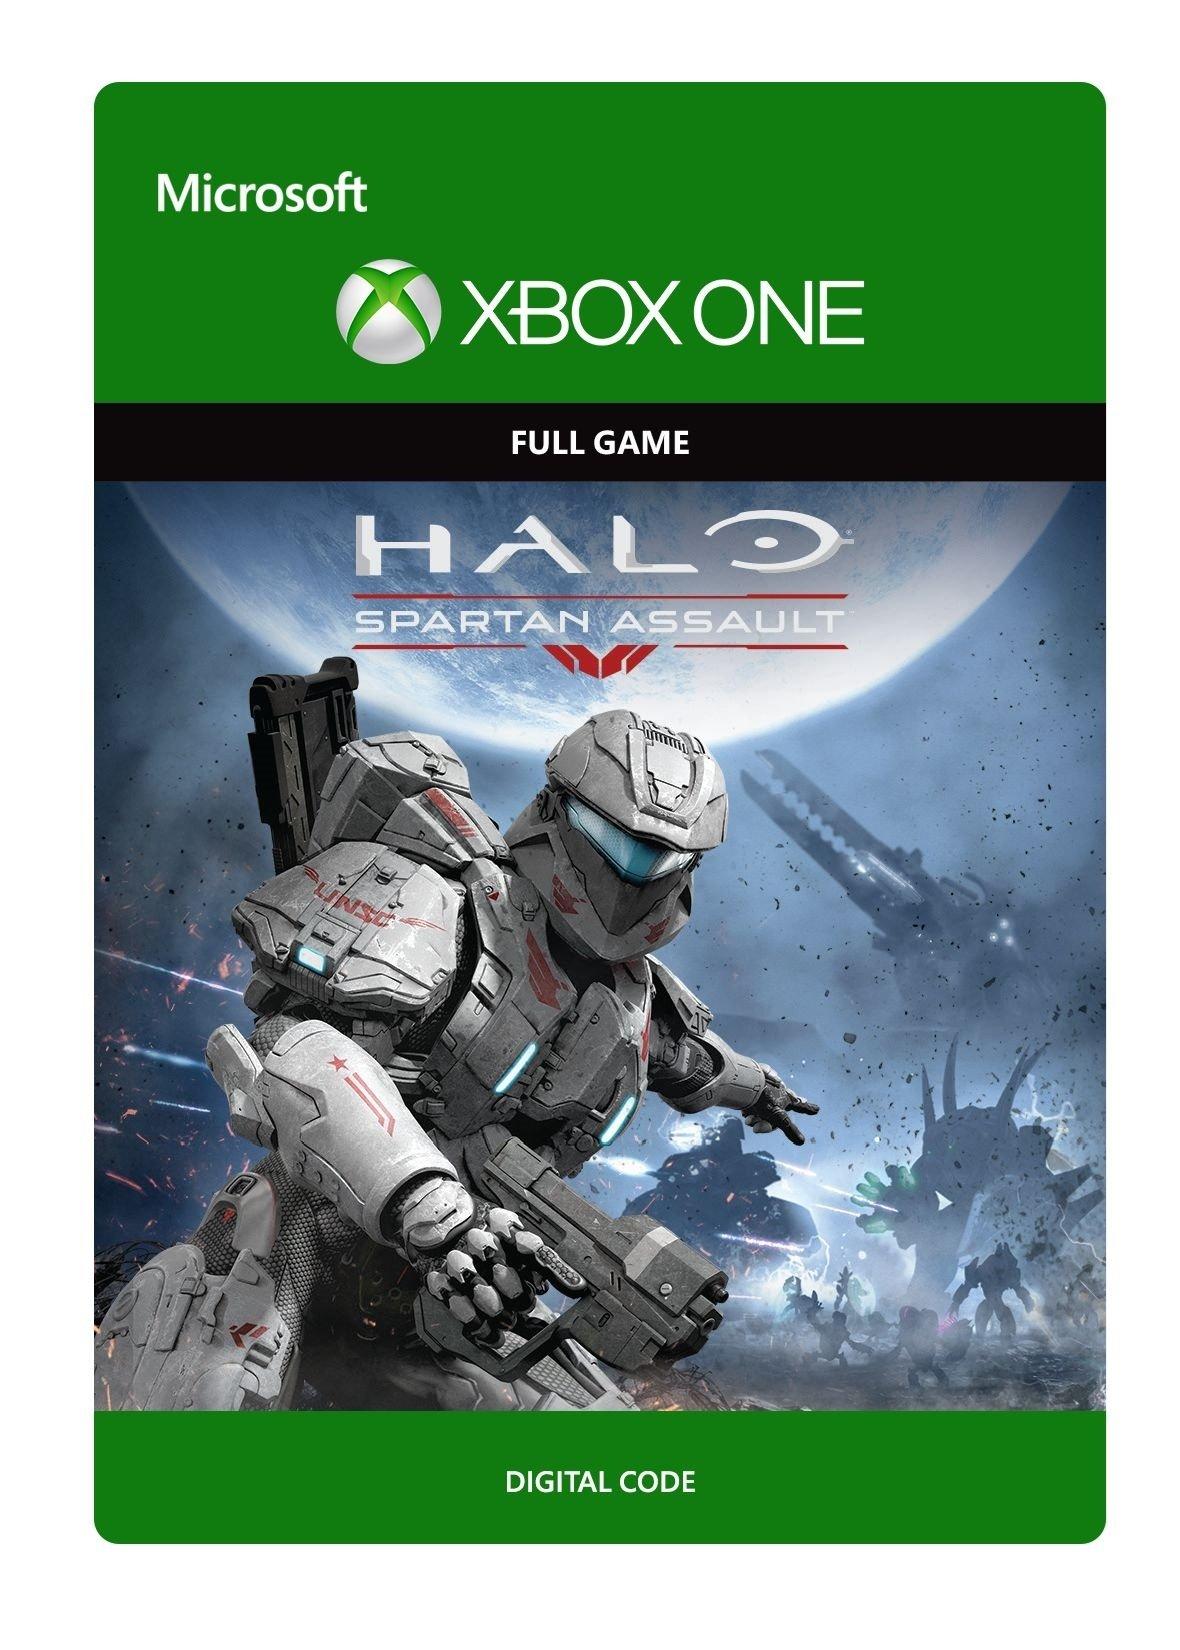 Halo: Spartan Assault Xbox One Arcade Full Game (Digitale Code) | 7CM-00014 (c8eabe91-a7c5-438e-b871-7c09d957a55f)